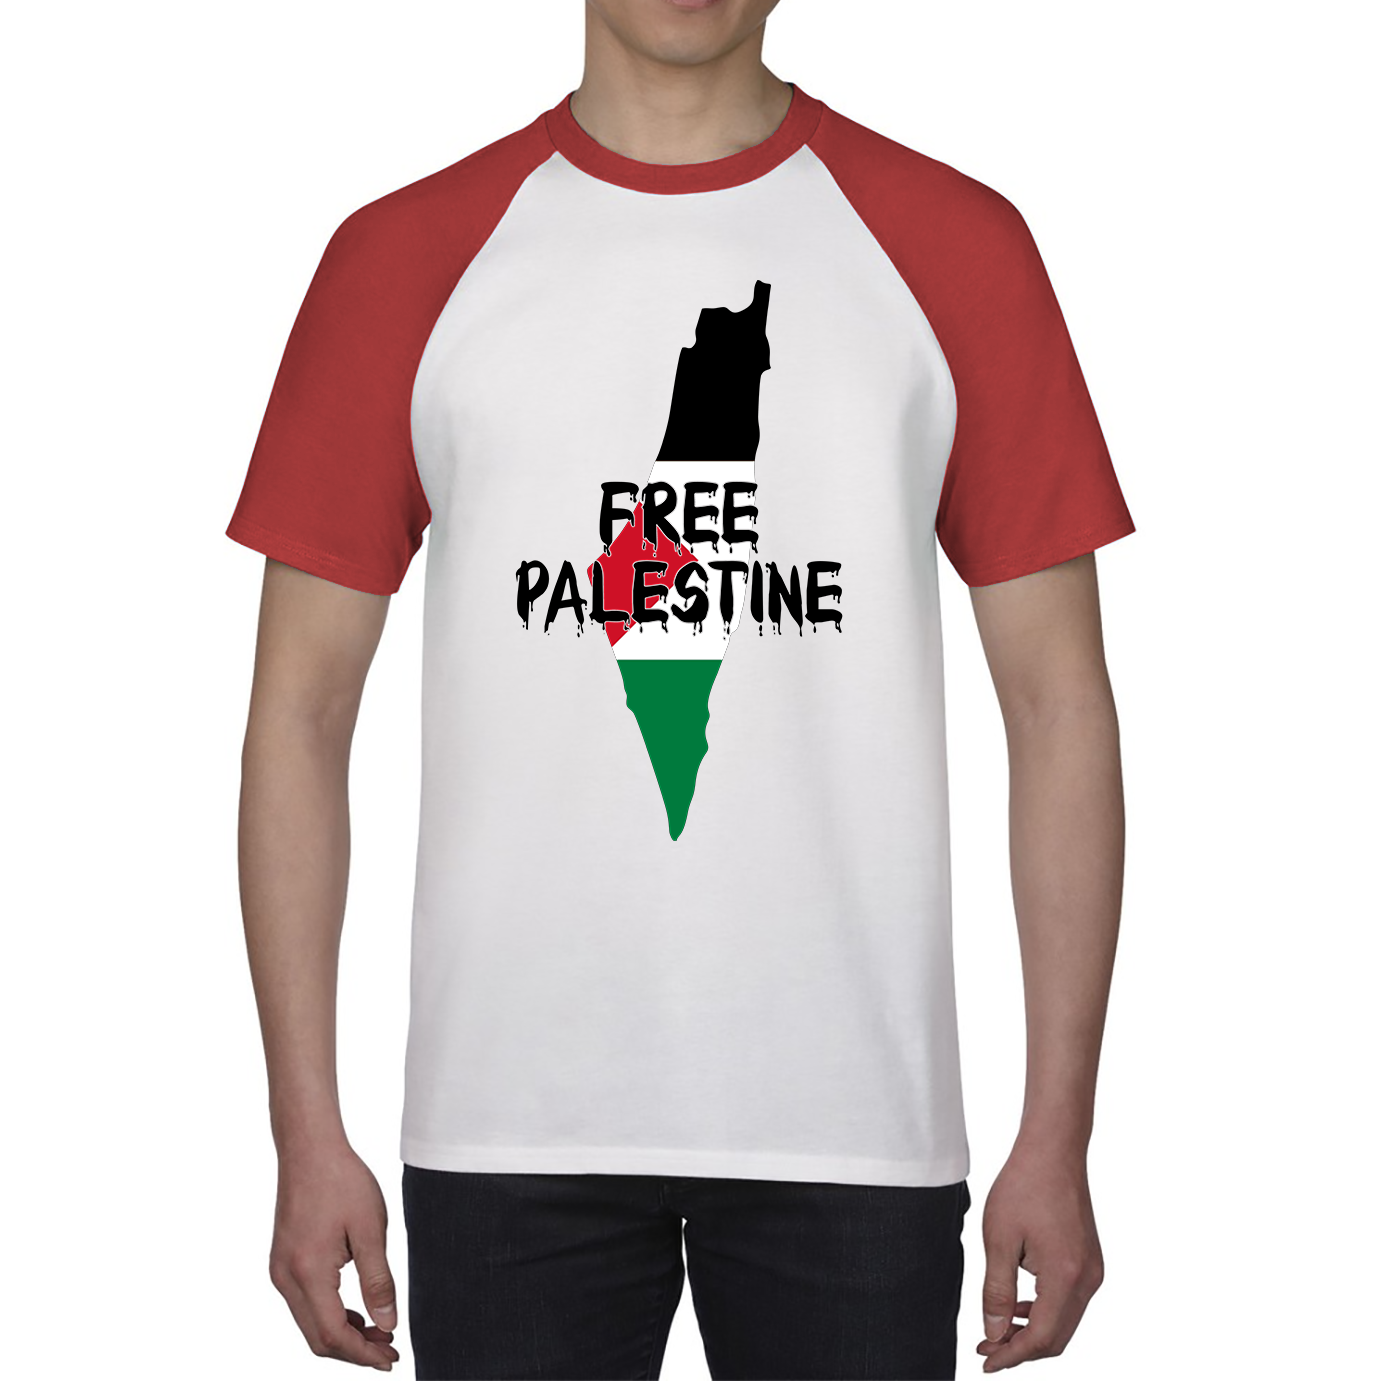 Free Palestine Stand With Palestine Muslim Lives Matter End Israeli Occupation Freedom Baseball T Shirt